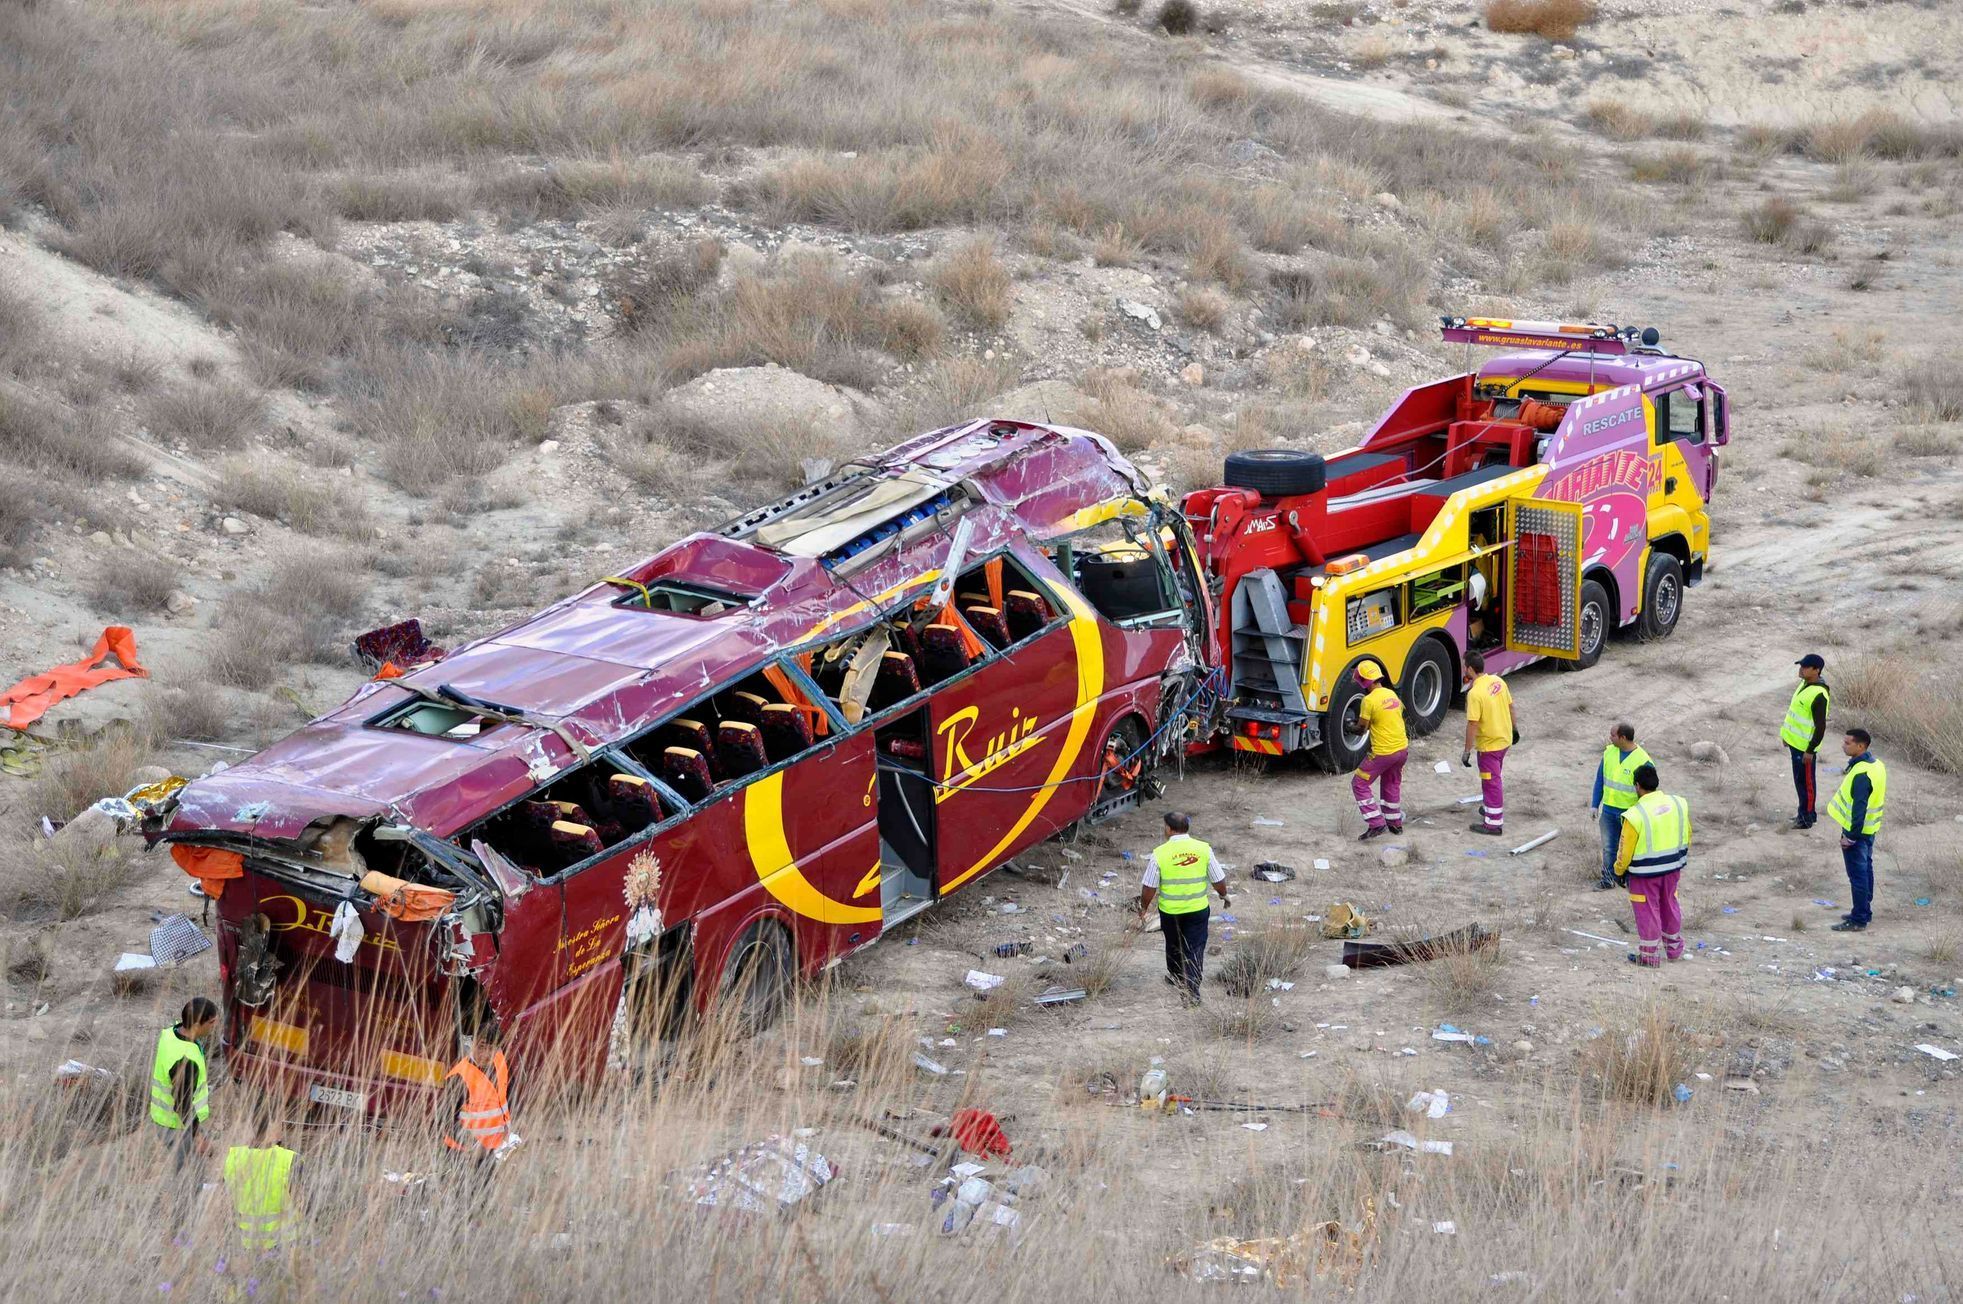 Španělsko - autobus - nehoda